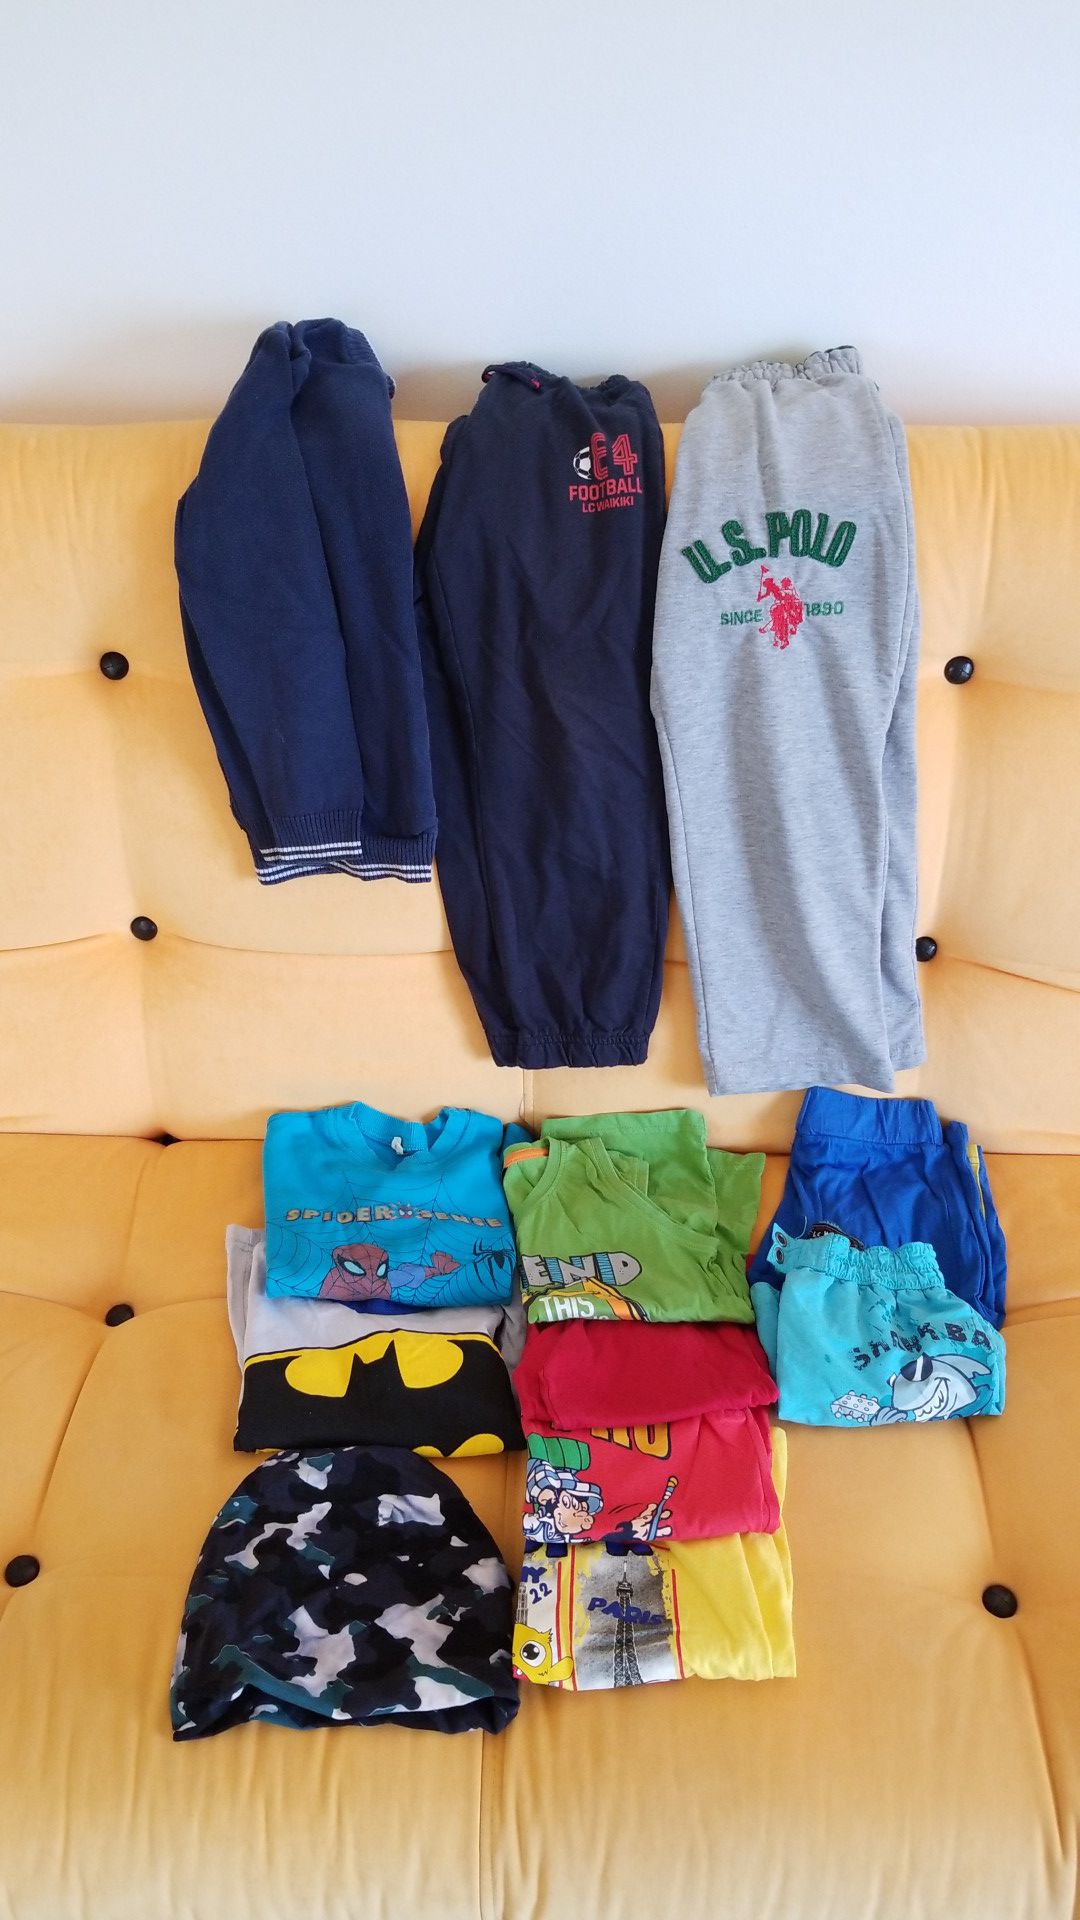 Kids clothes for 5-6 ages (12 pieces)